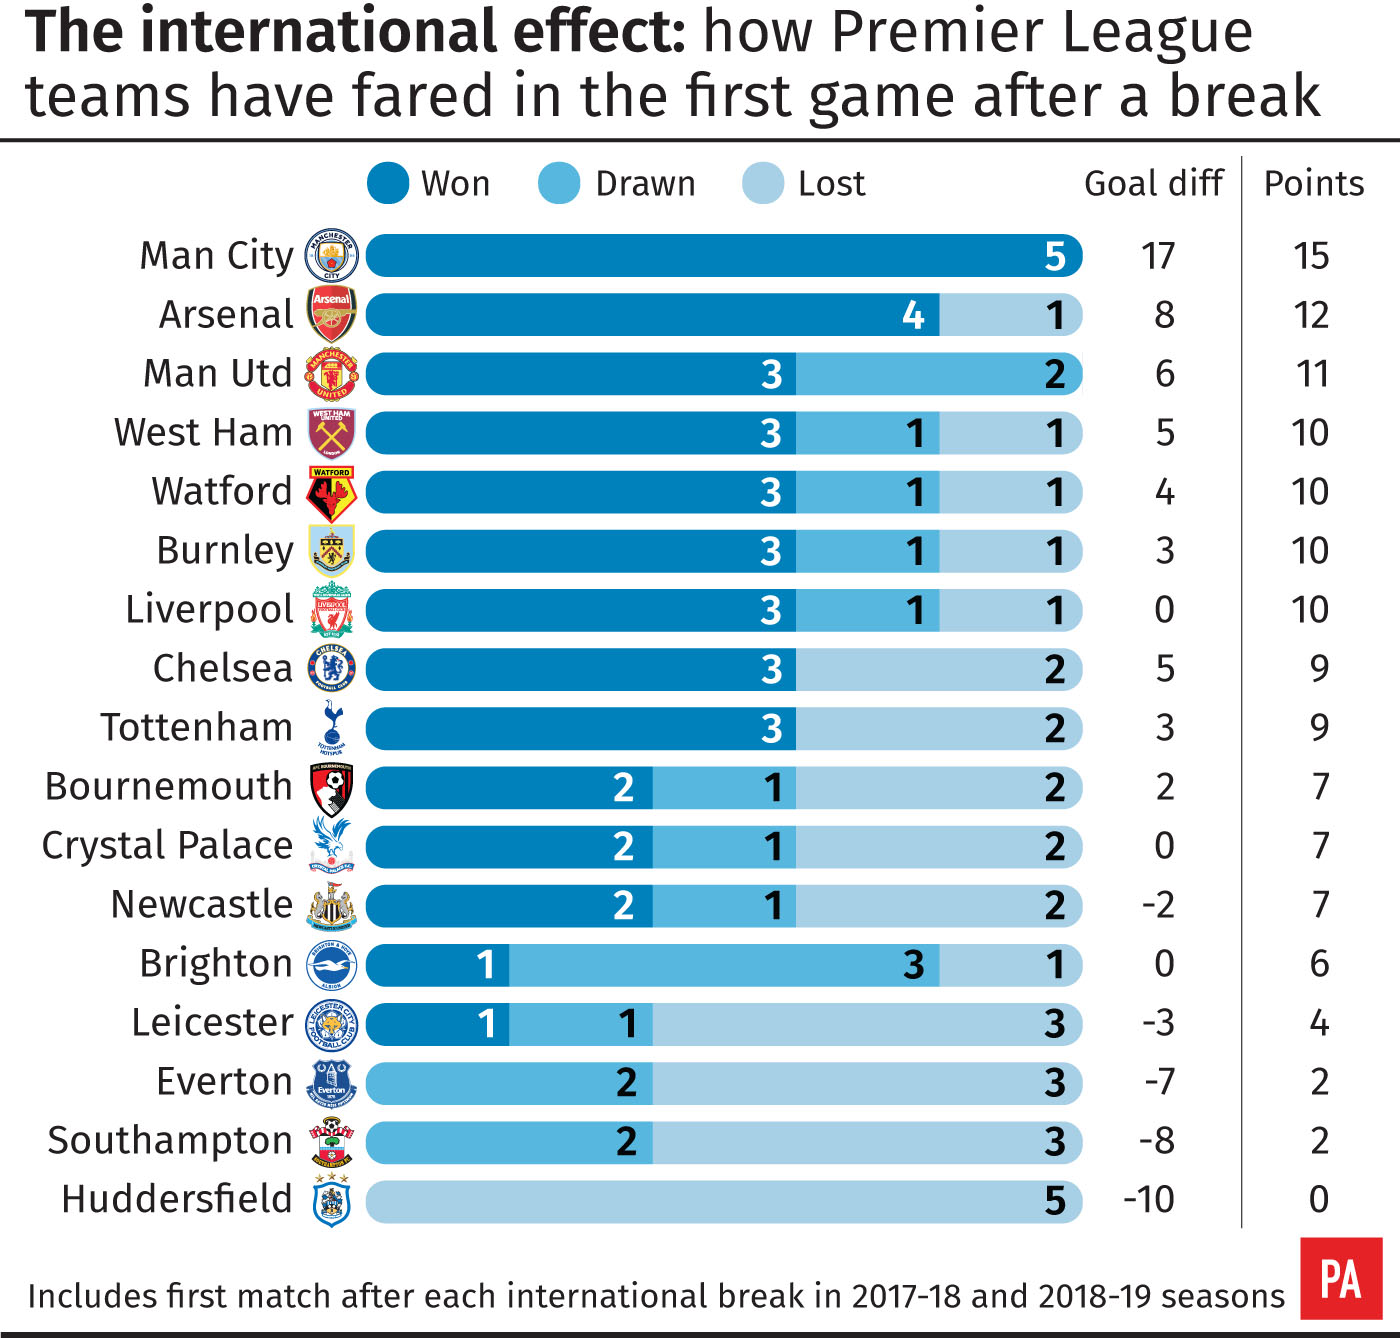 Premier League clubs' record after international breaks